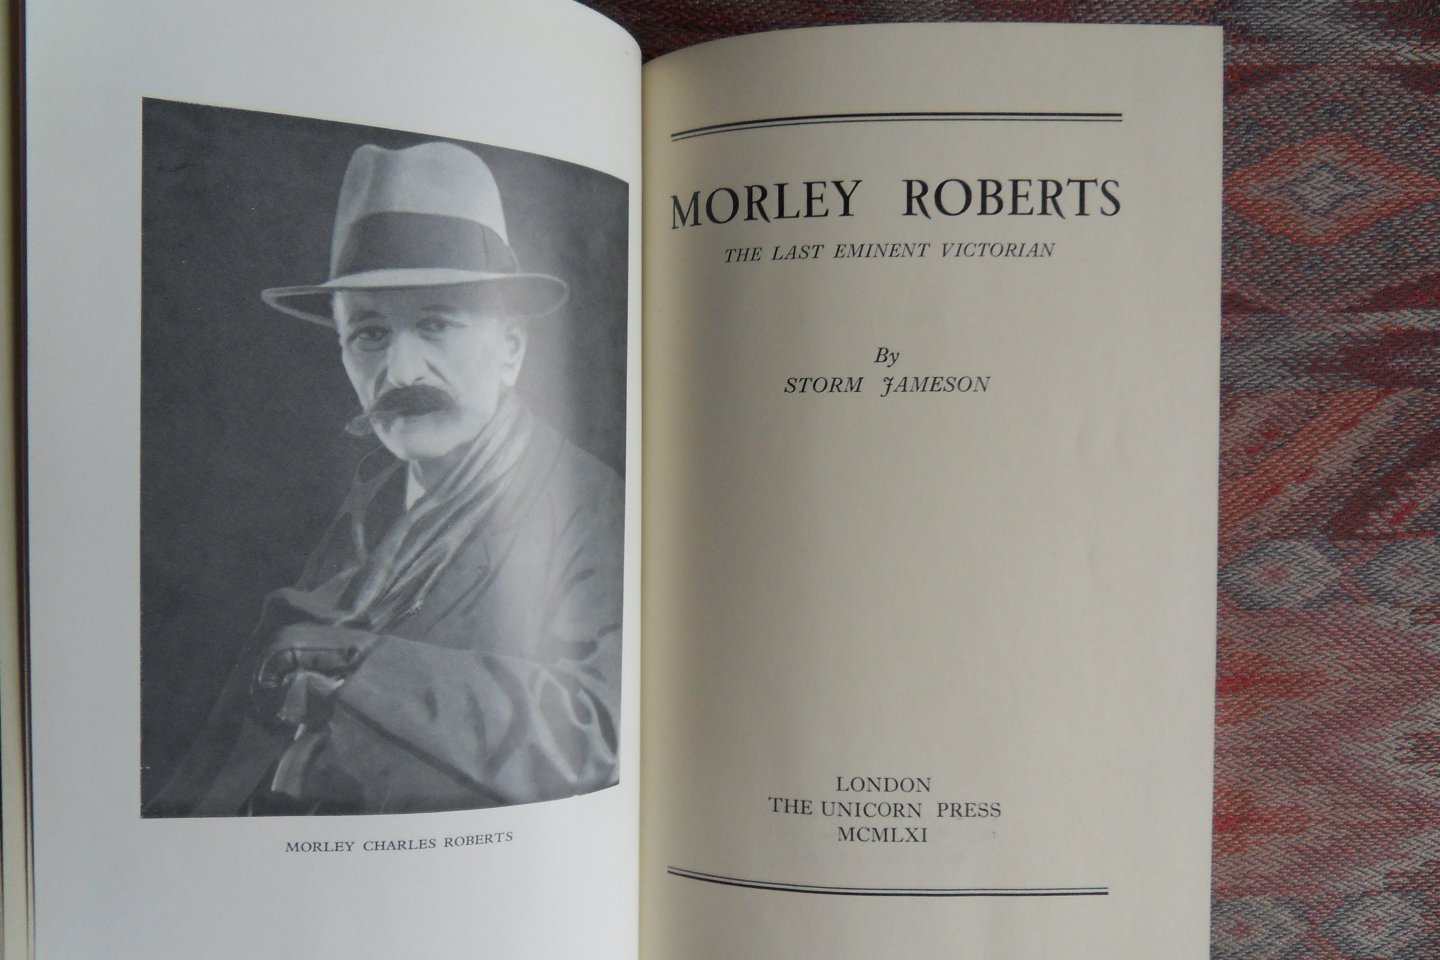 Storm Jameson, Miss (Margaret). [ 1891 - 1986 ]. - Morley Roberts, - The Last Eminent Victorian.